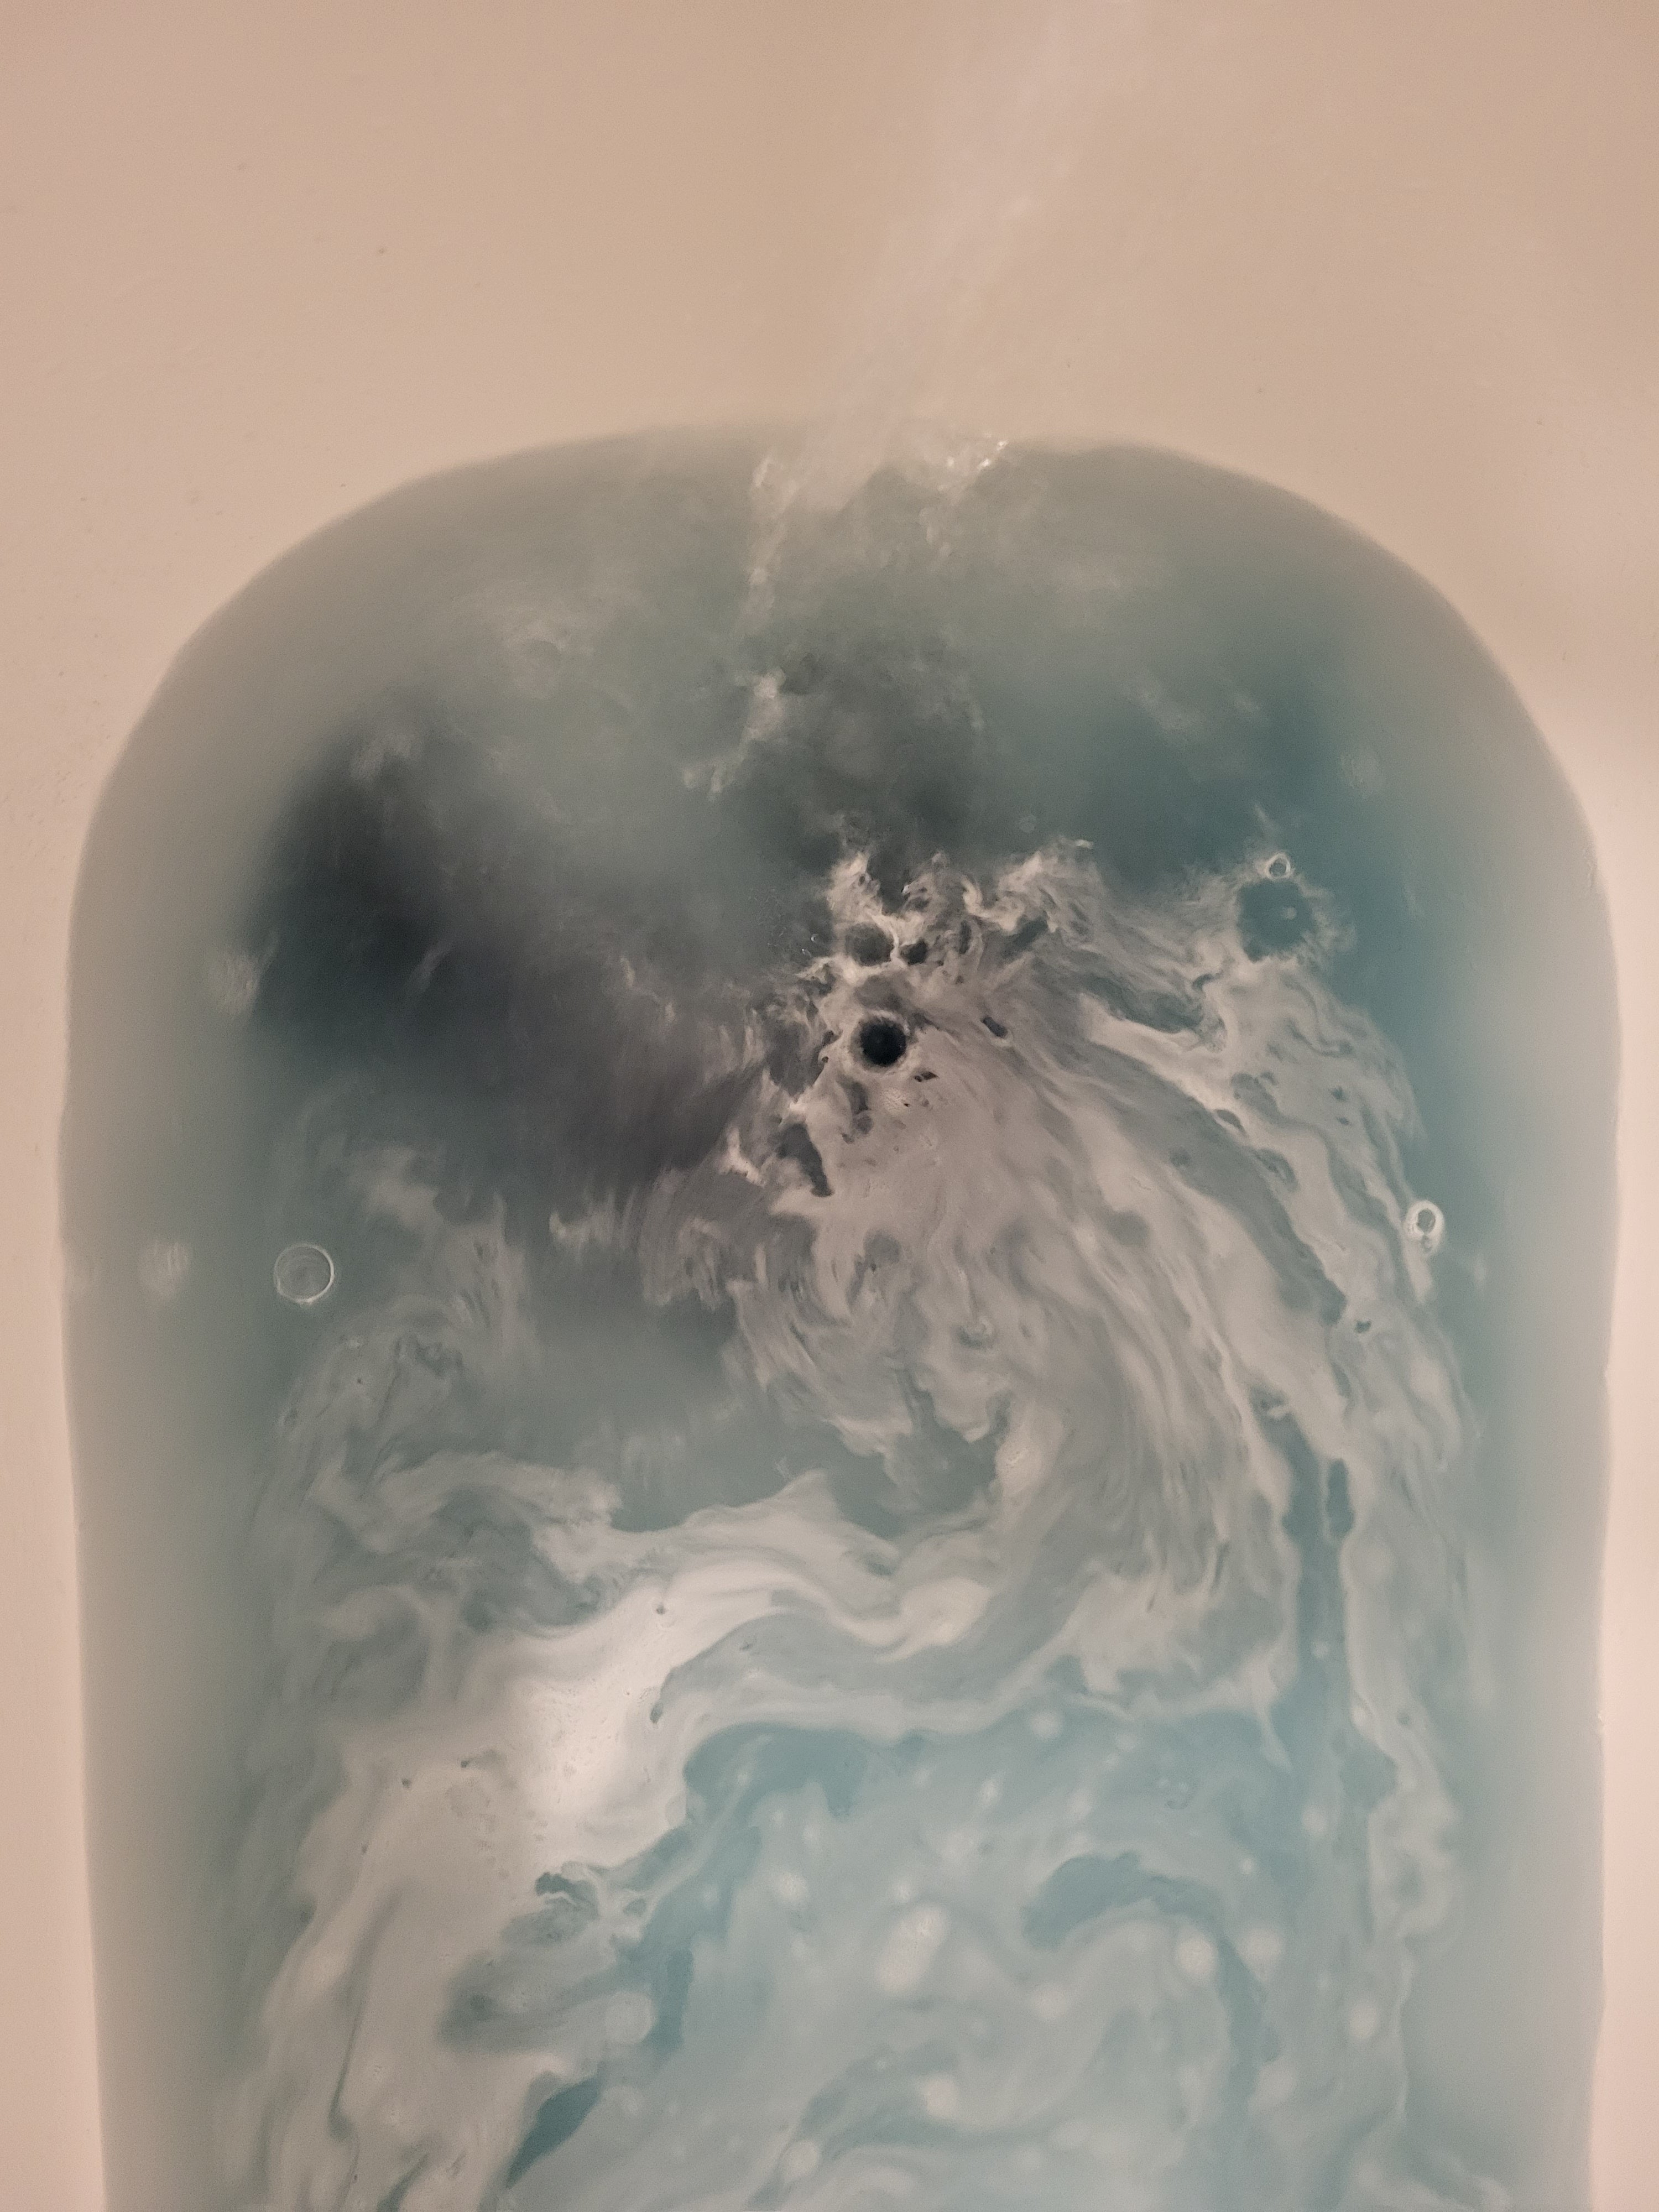 Blue Lavender | Calming CBD Bath Soak